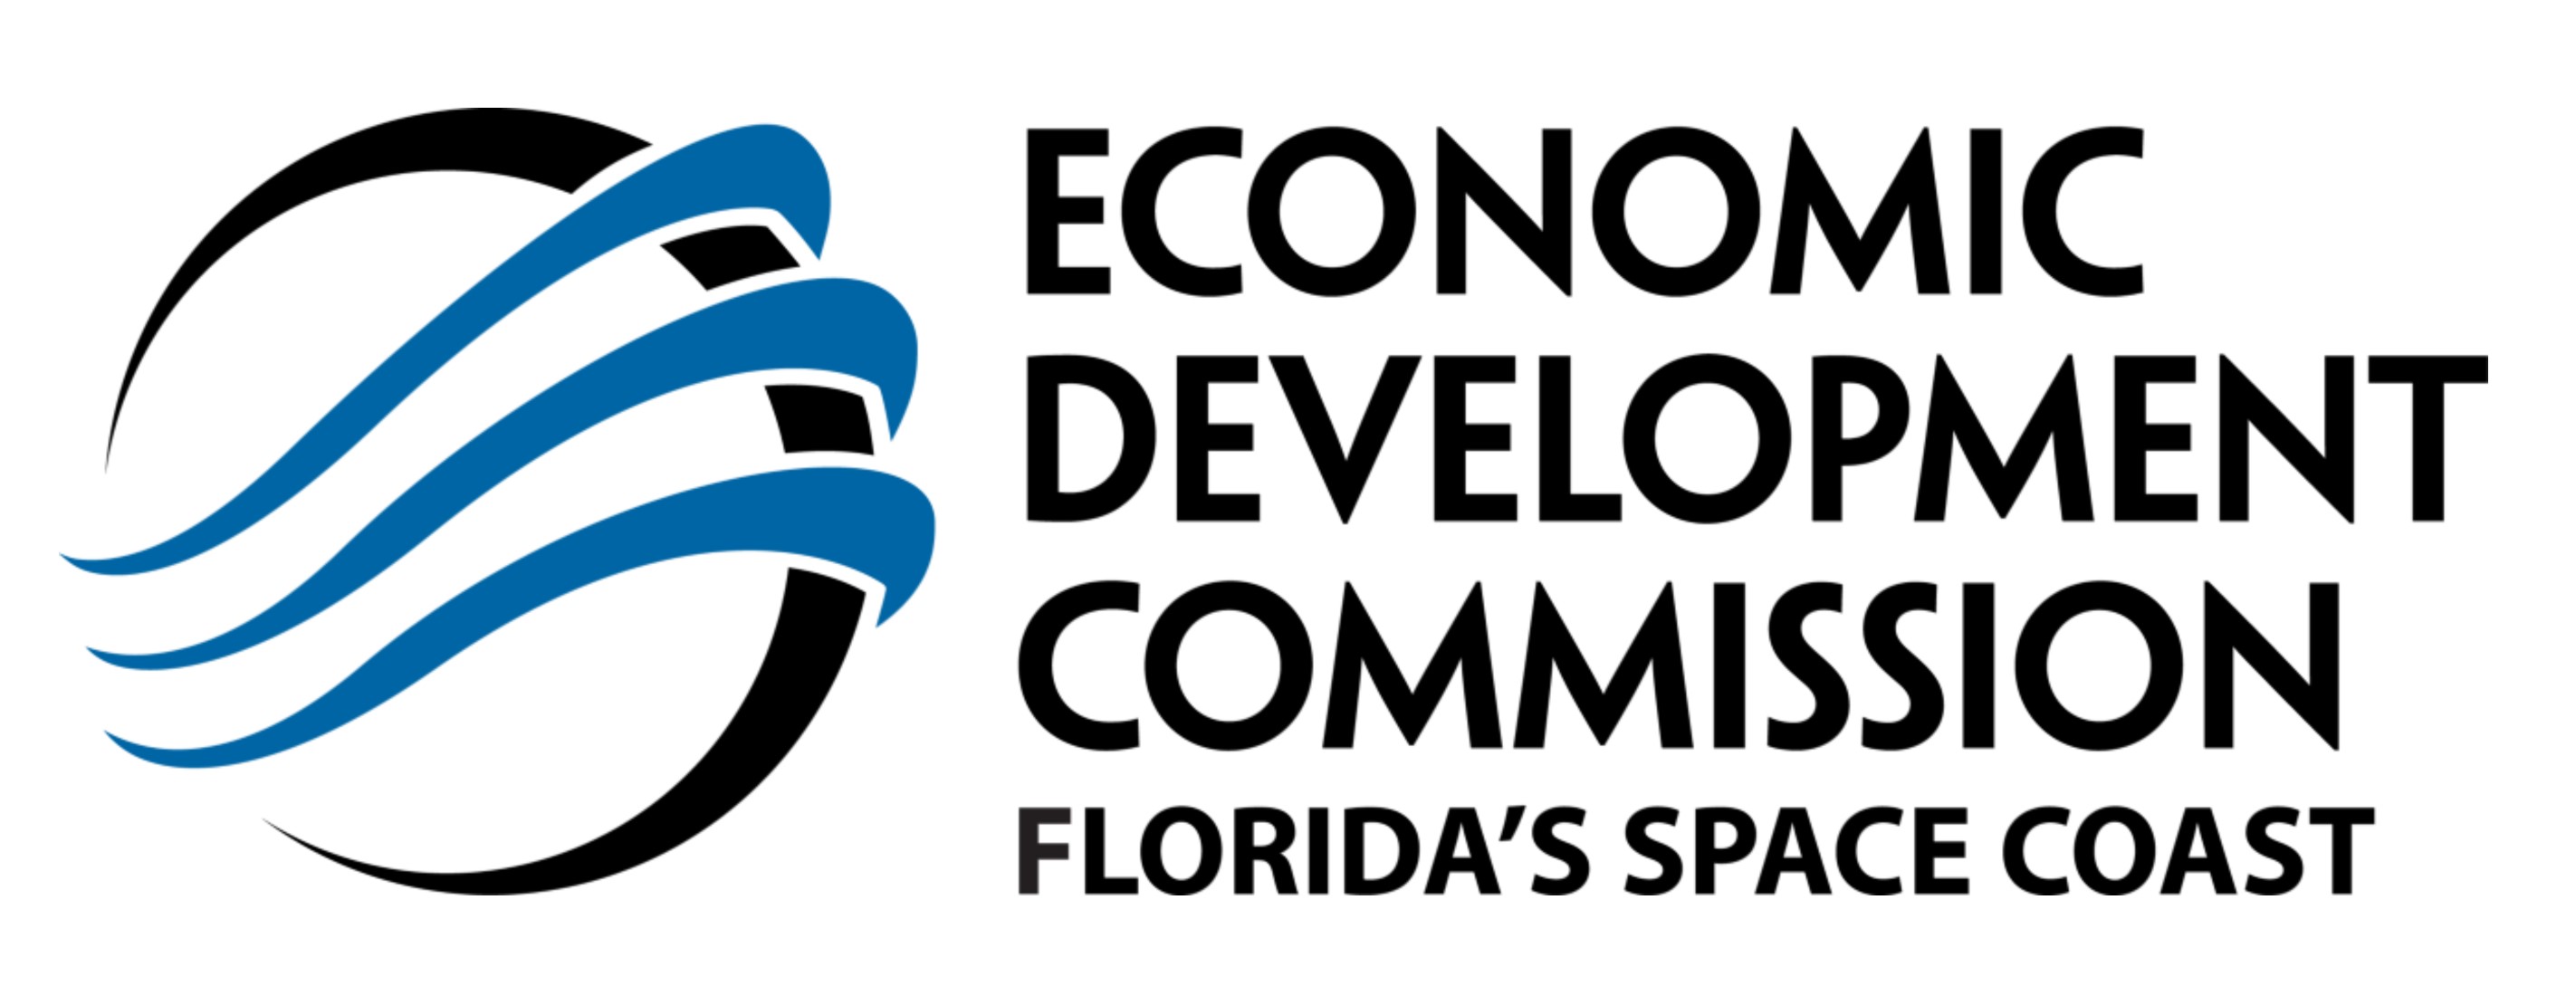 Economic Development Commission